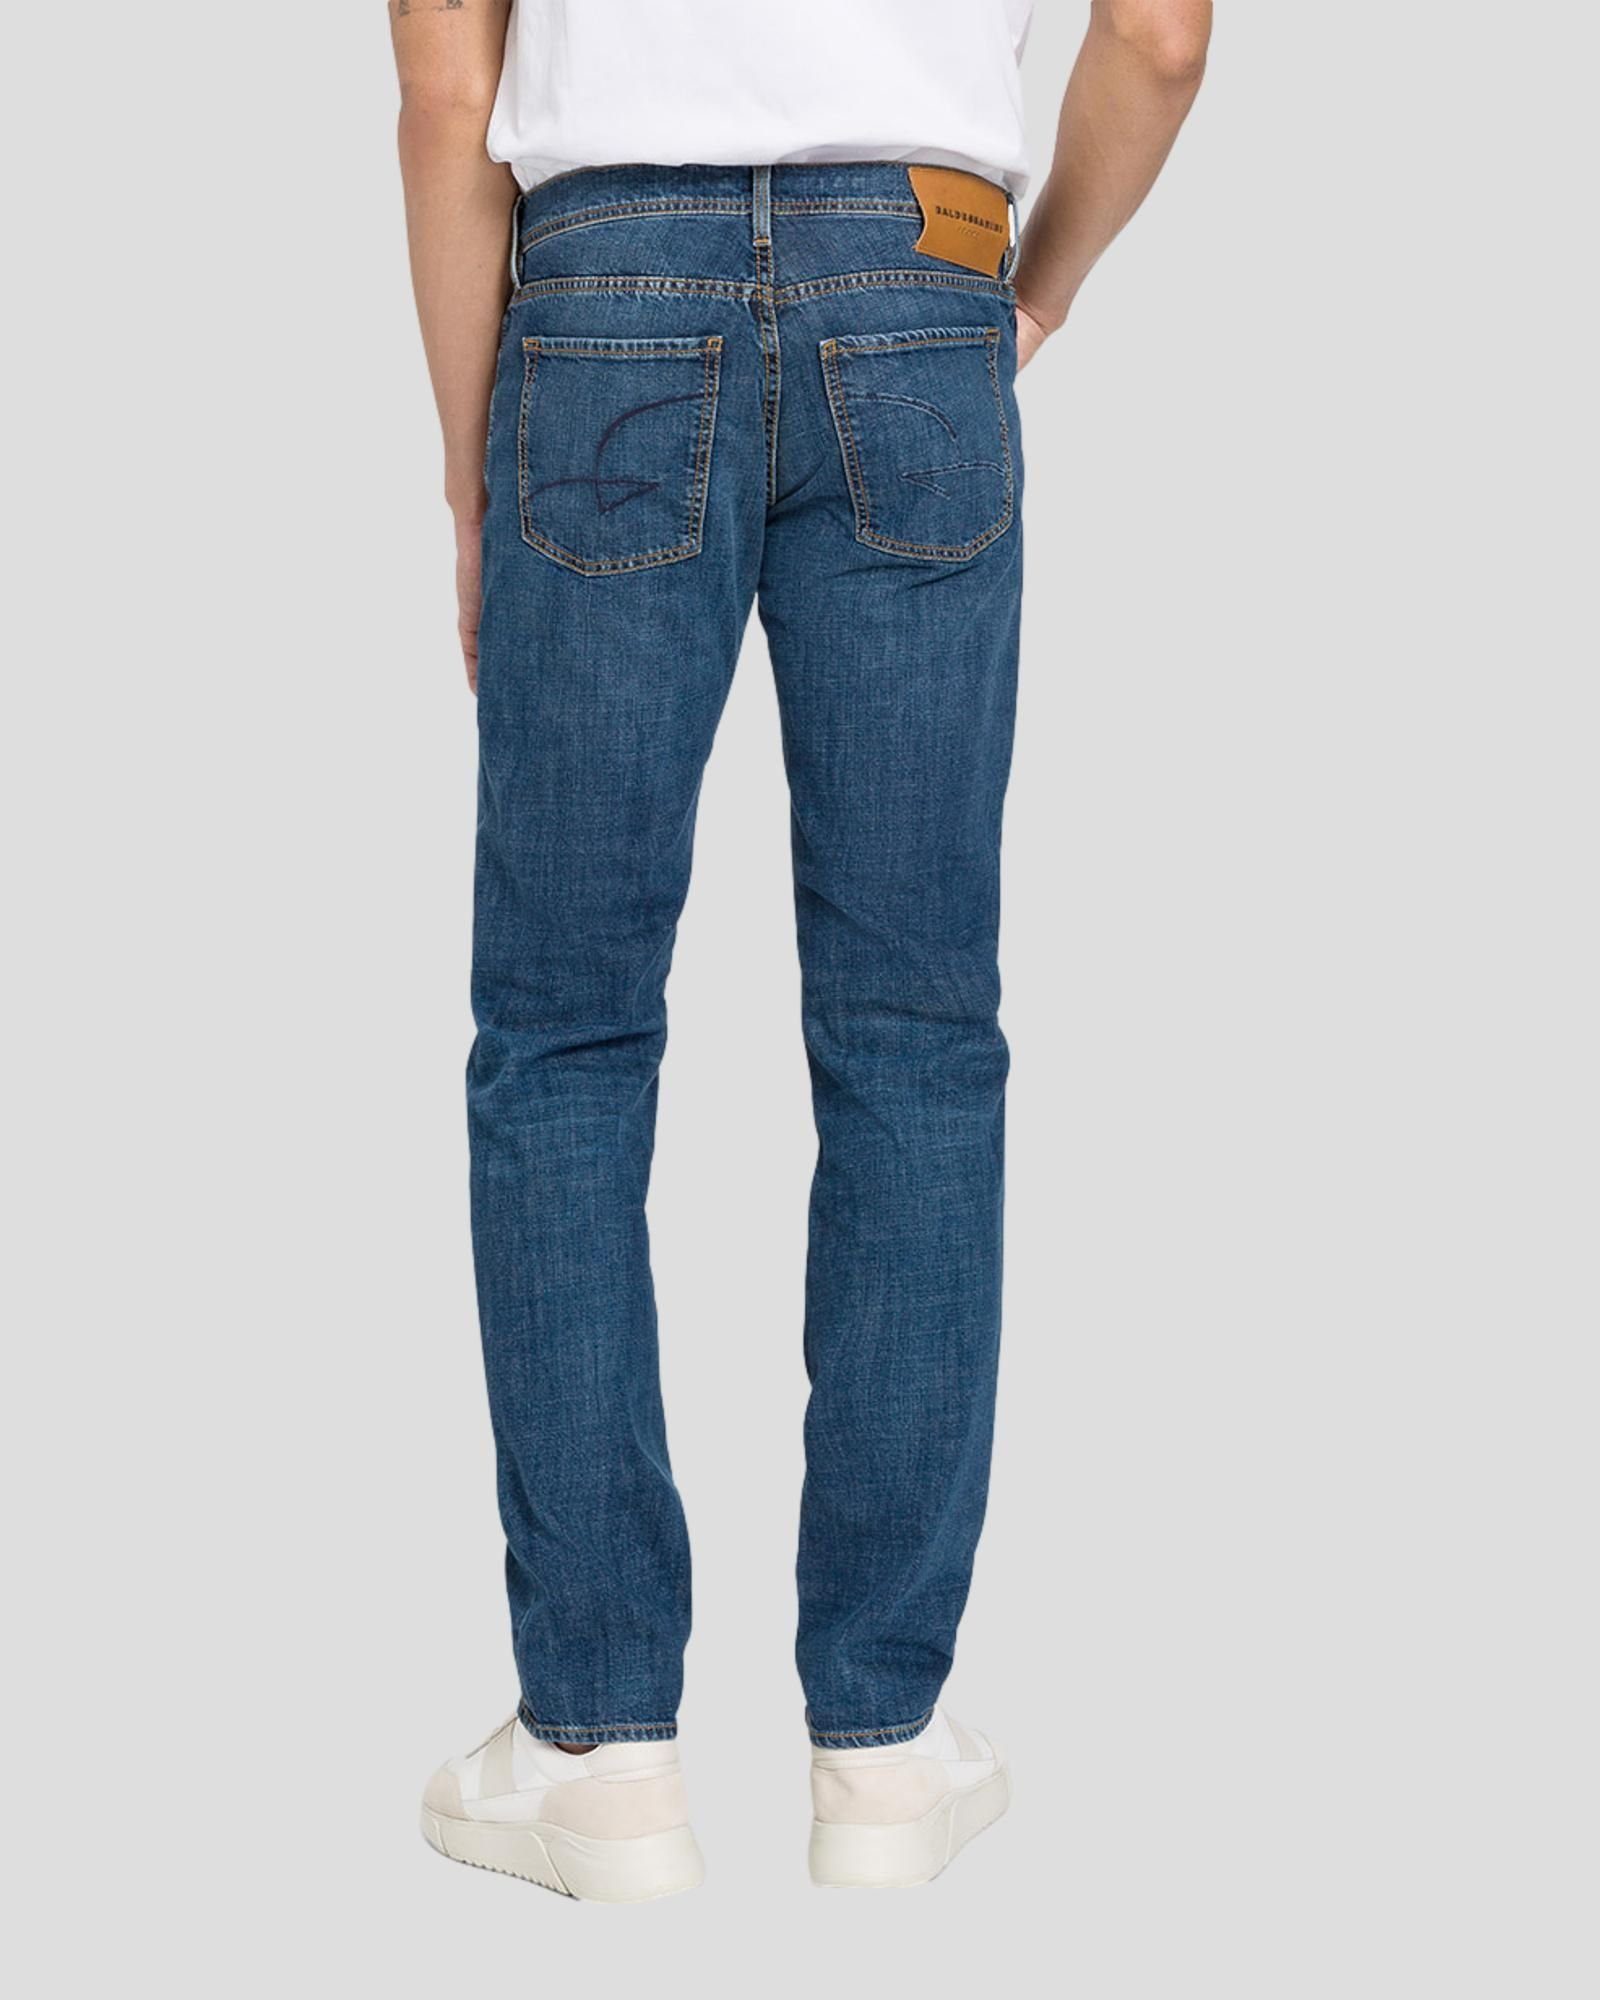 BALDESSARINI 5-Pocket-Jeans 6837 ocean blue fash